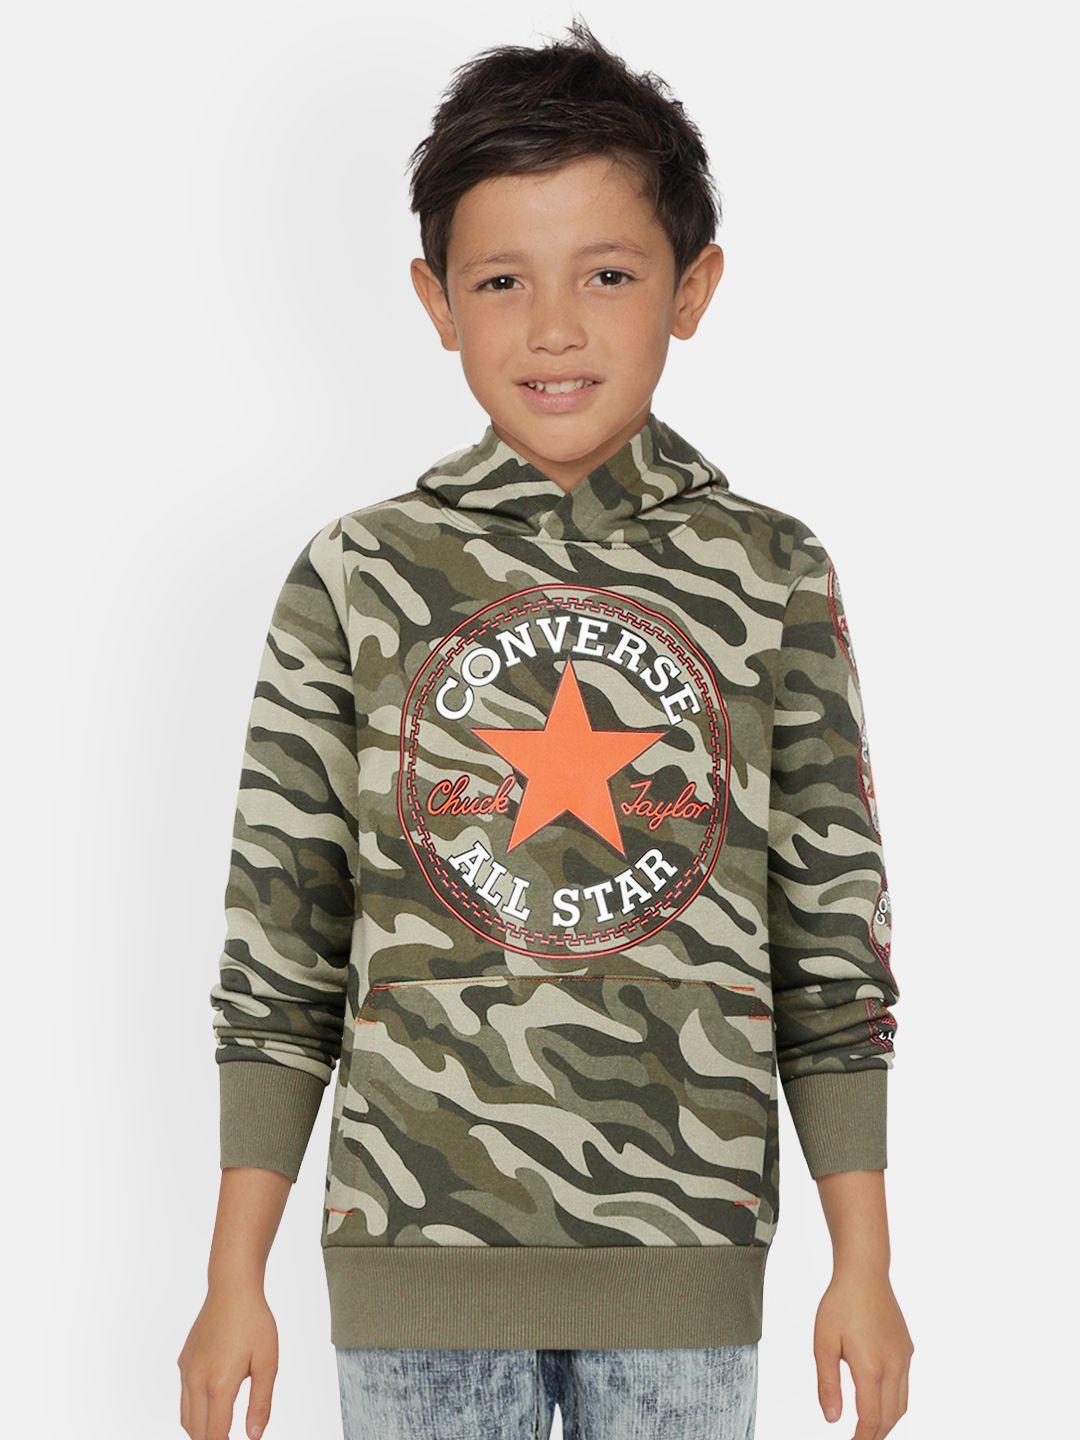 converse boys olive green & orange camouflage print hooded sweatshirt